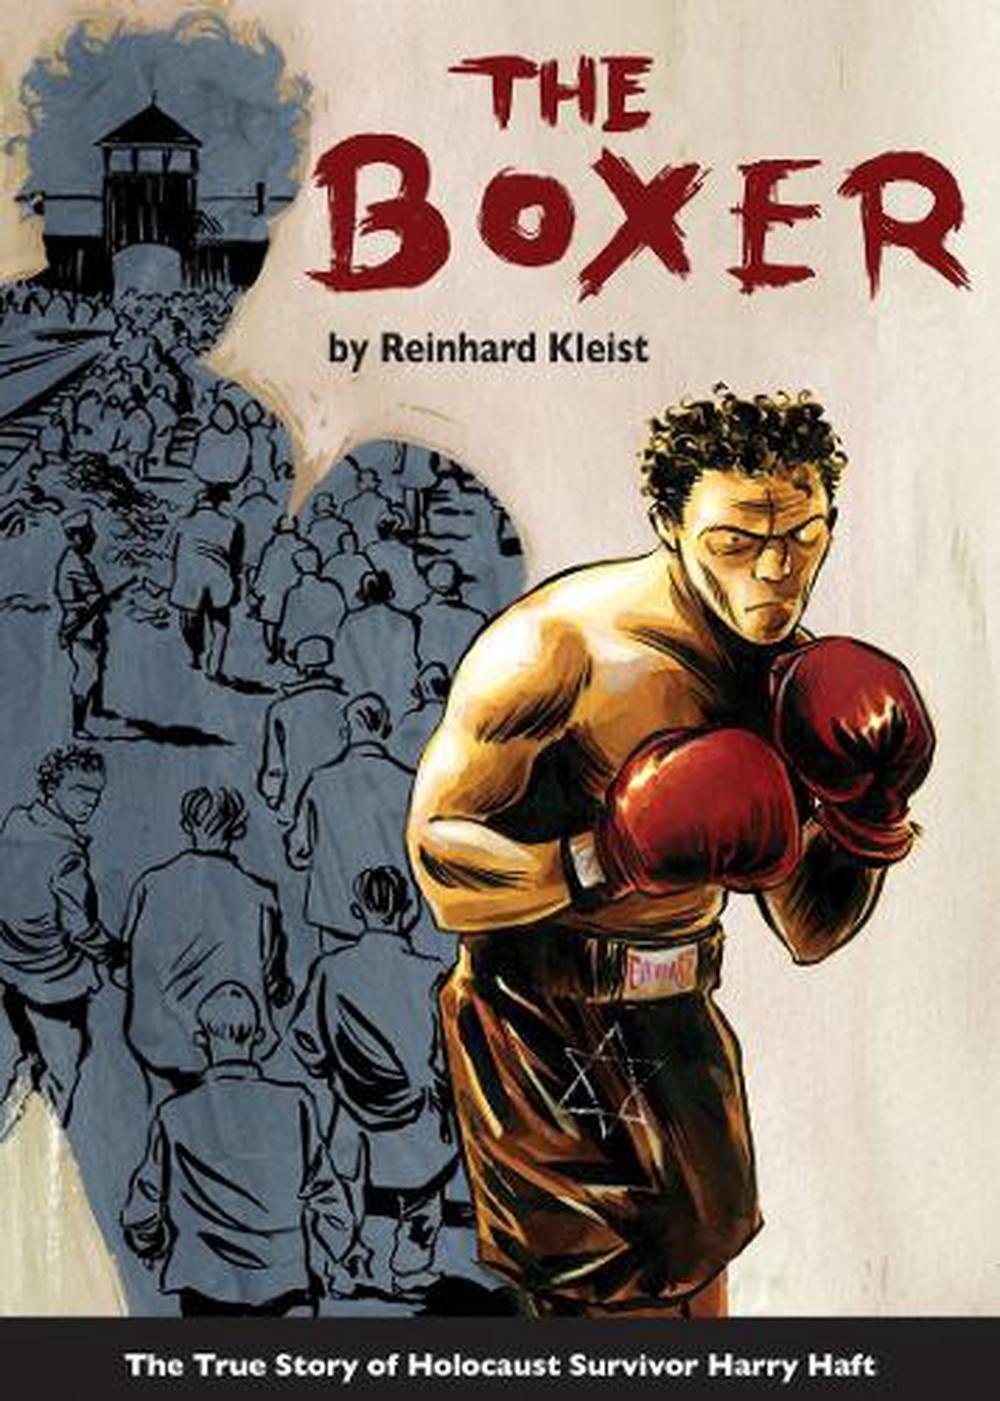 The Boxer: The True Story of Holocaust Survivor Harry Haft by Reinhard Kleist (E